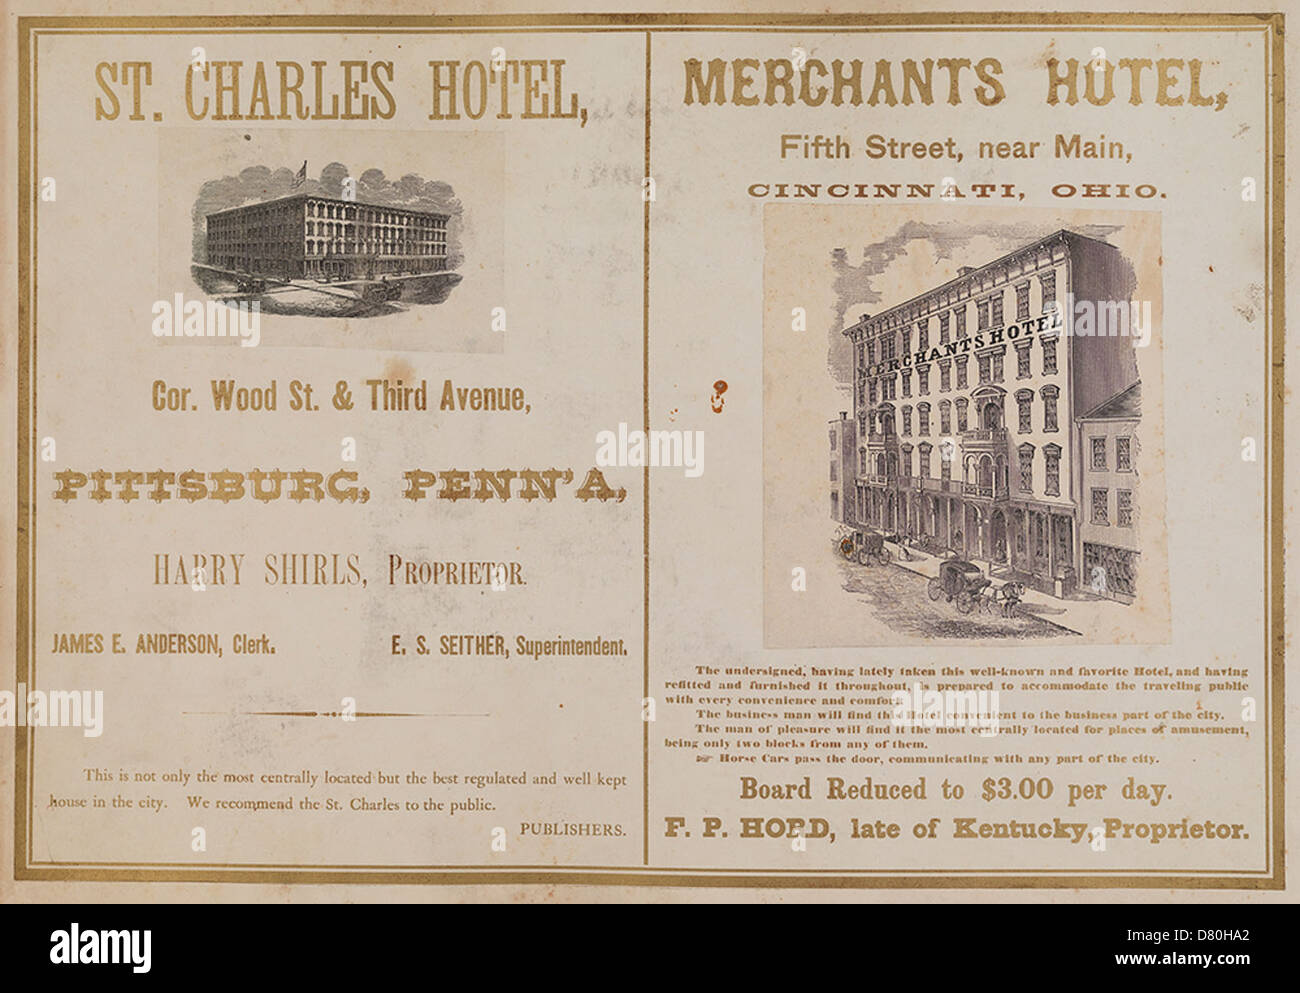 St. Charles Hotel, Pittsburg., Penn'a; Merchants Hotel, Cincinnati, Ohio Stockfoto